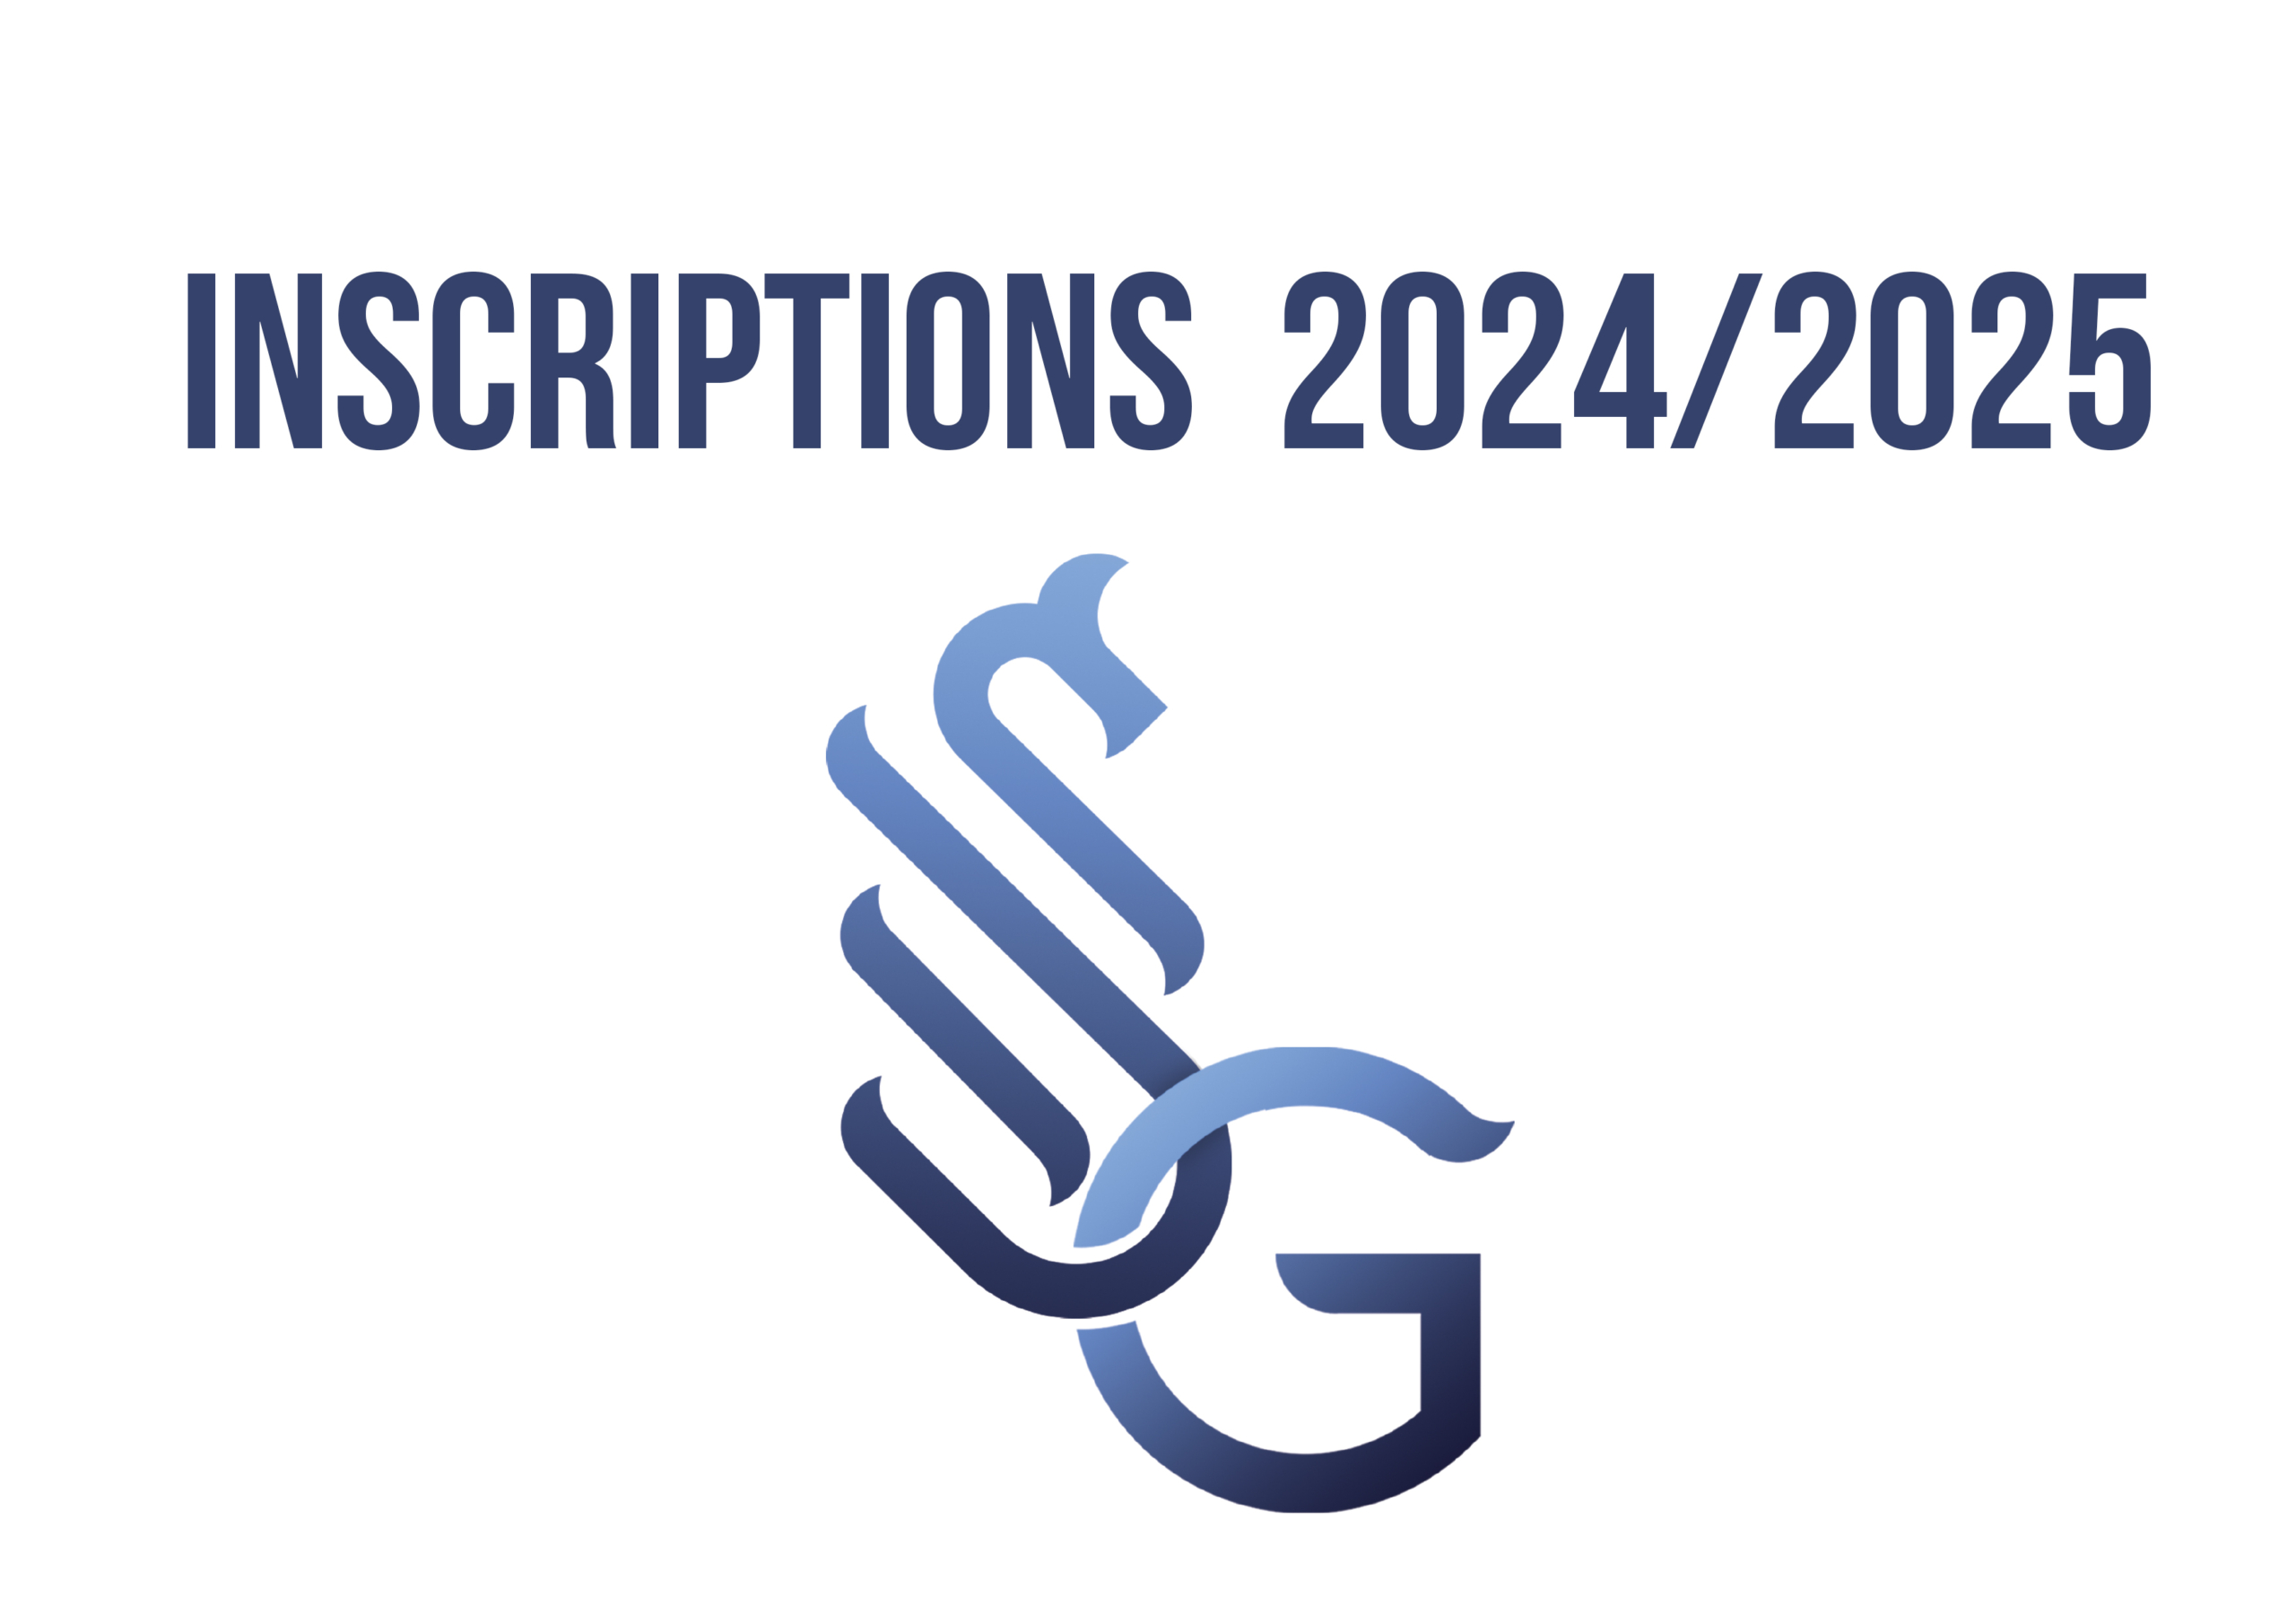 Inscriptions 2024-2025